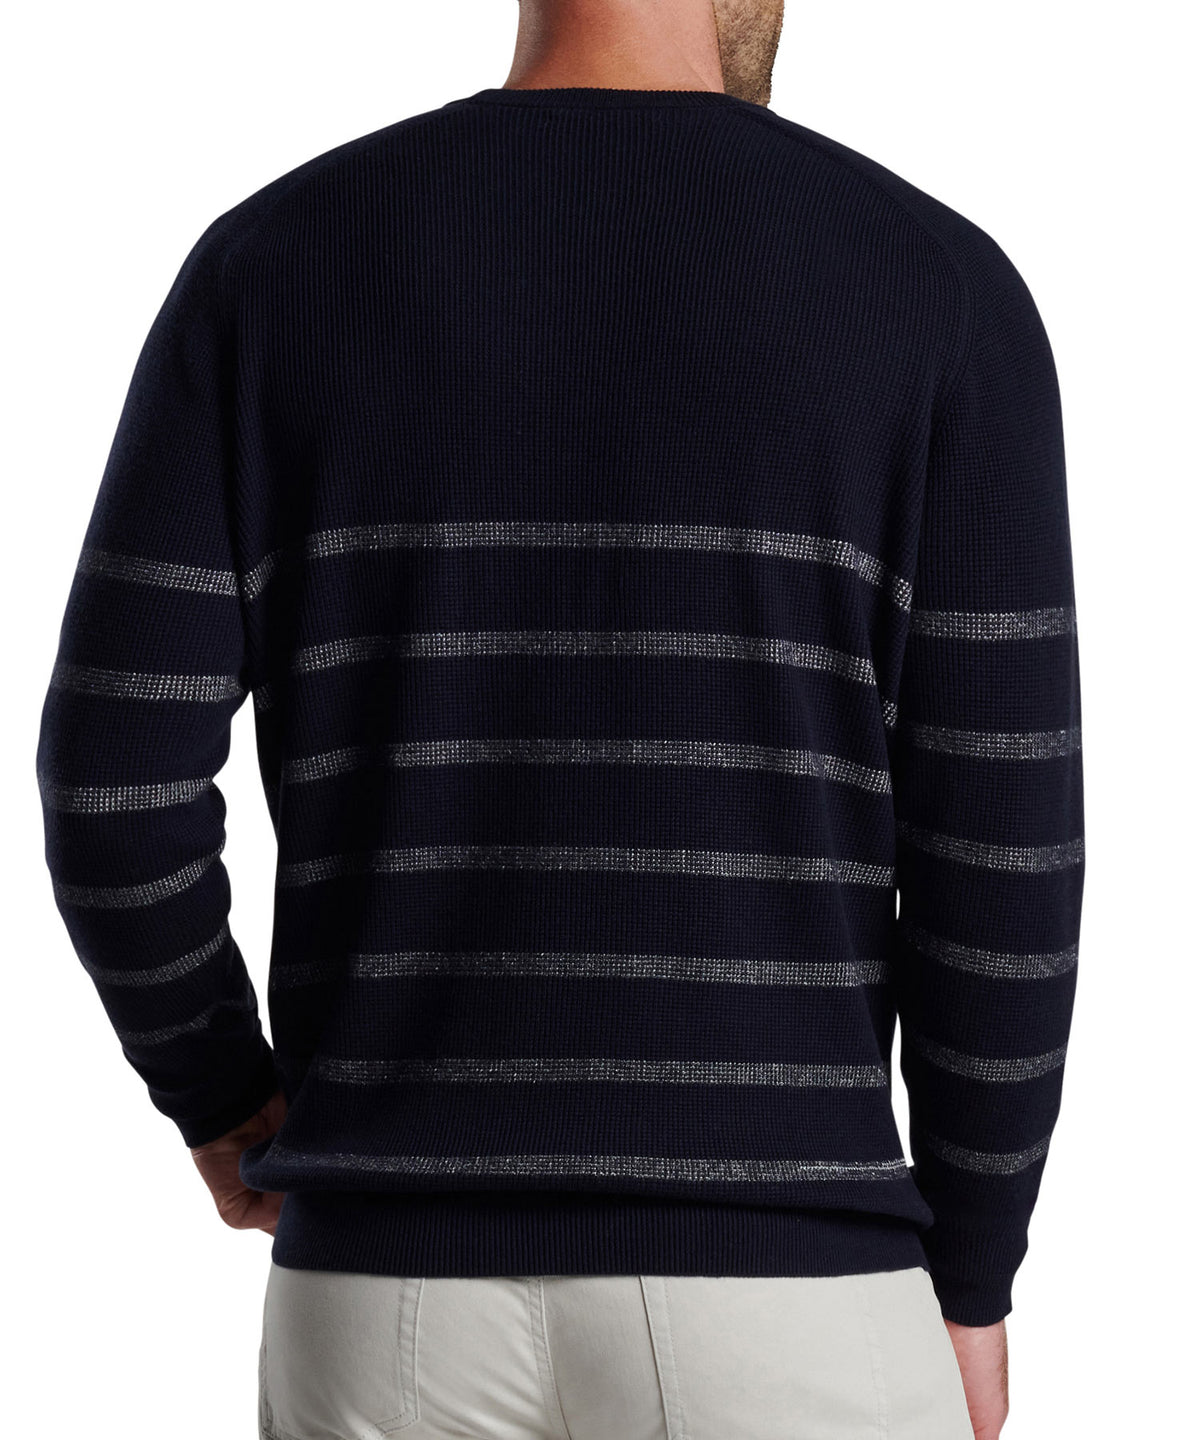 Peter Millar Sampson Crew Neck Sweater, Big & Tall